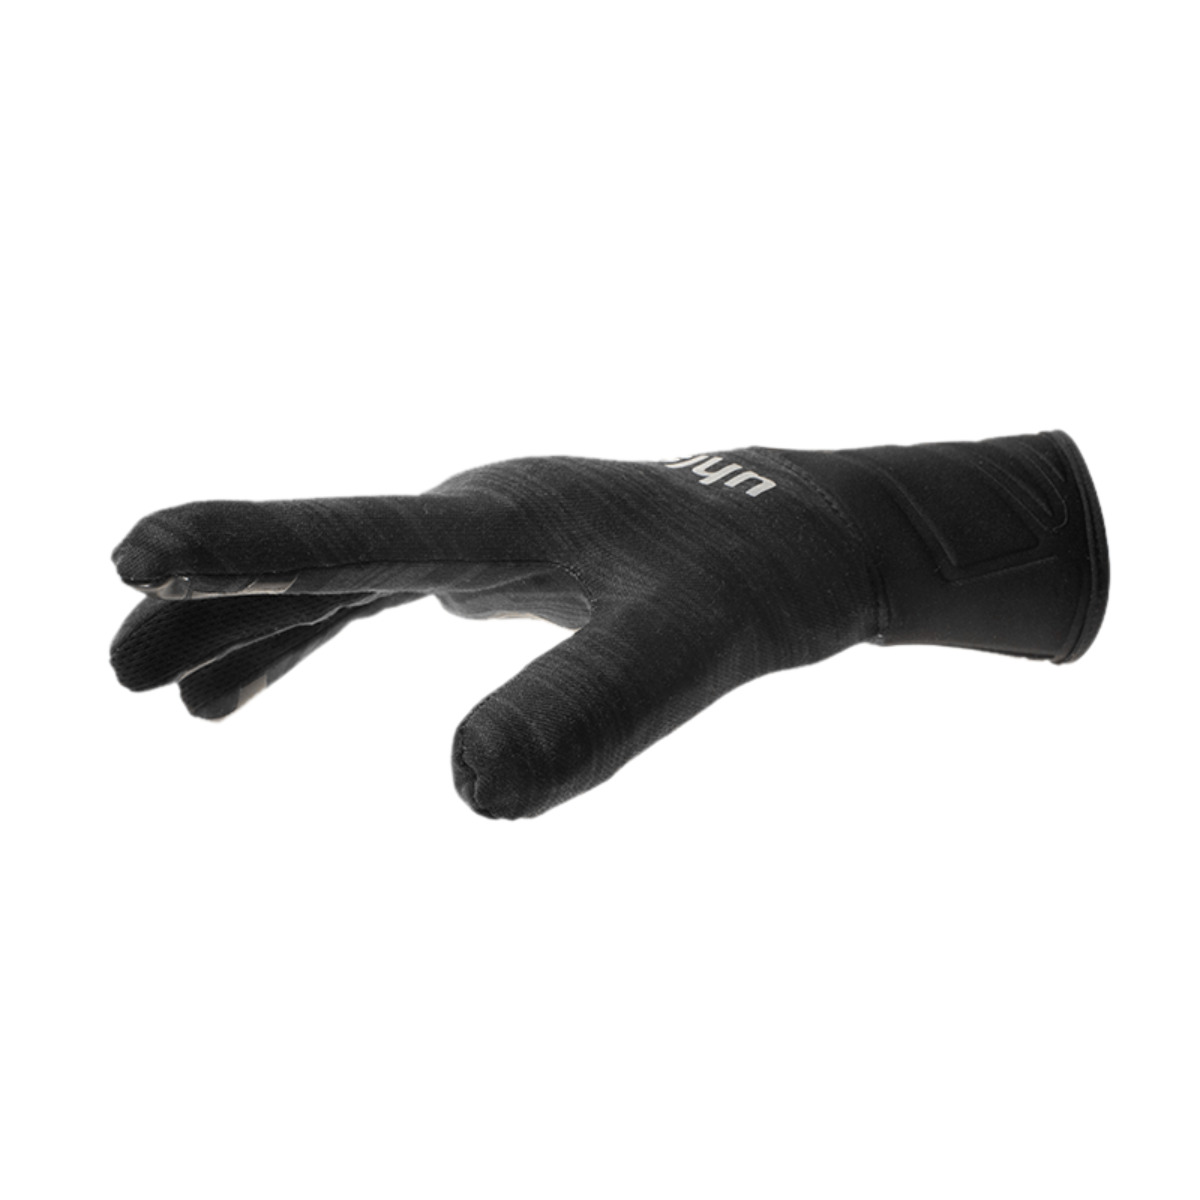 Uhlsport Nitrotec Spielerhandschuh Handschuhe Größe 5 6 7 8 9 10 11 UVP war 25€ 